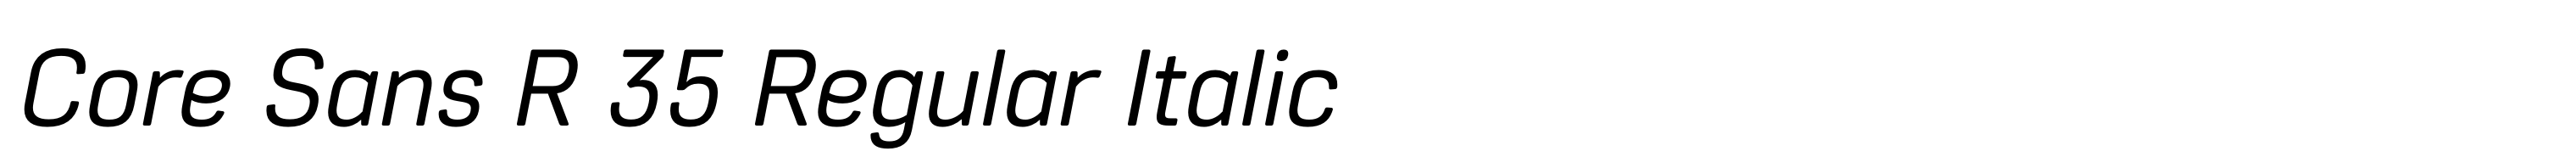 Core Sans R 35 Regular Italic